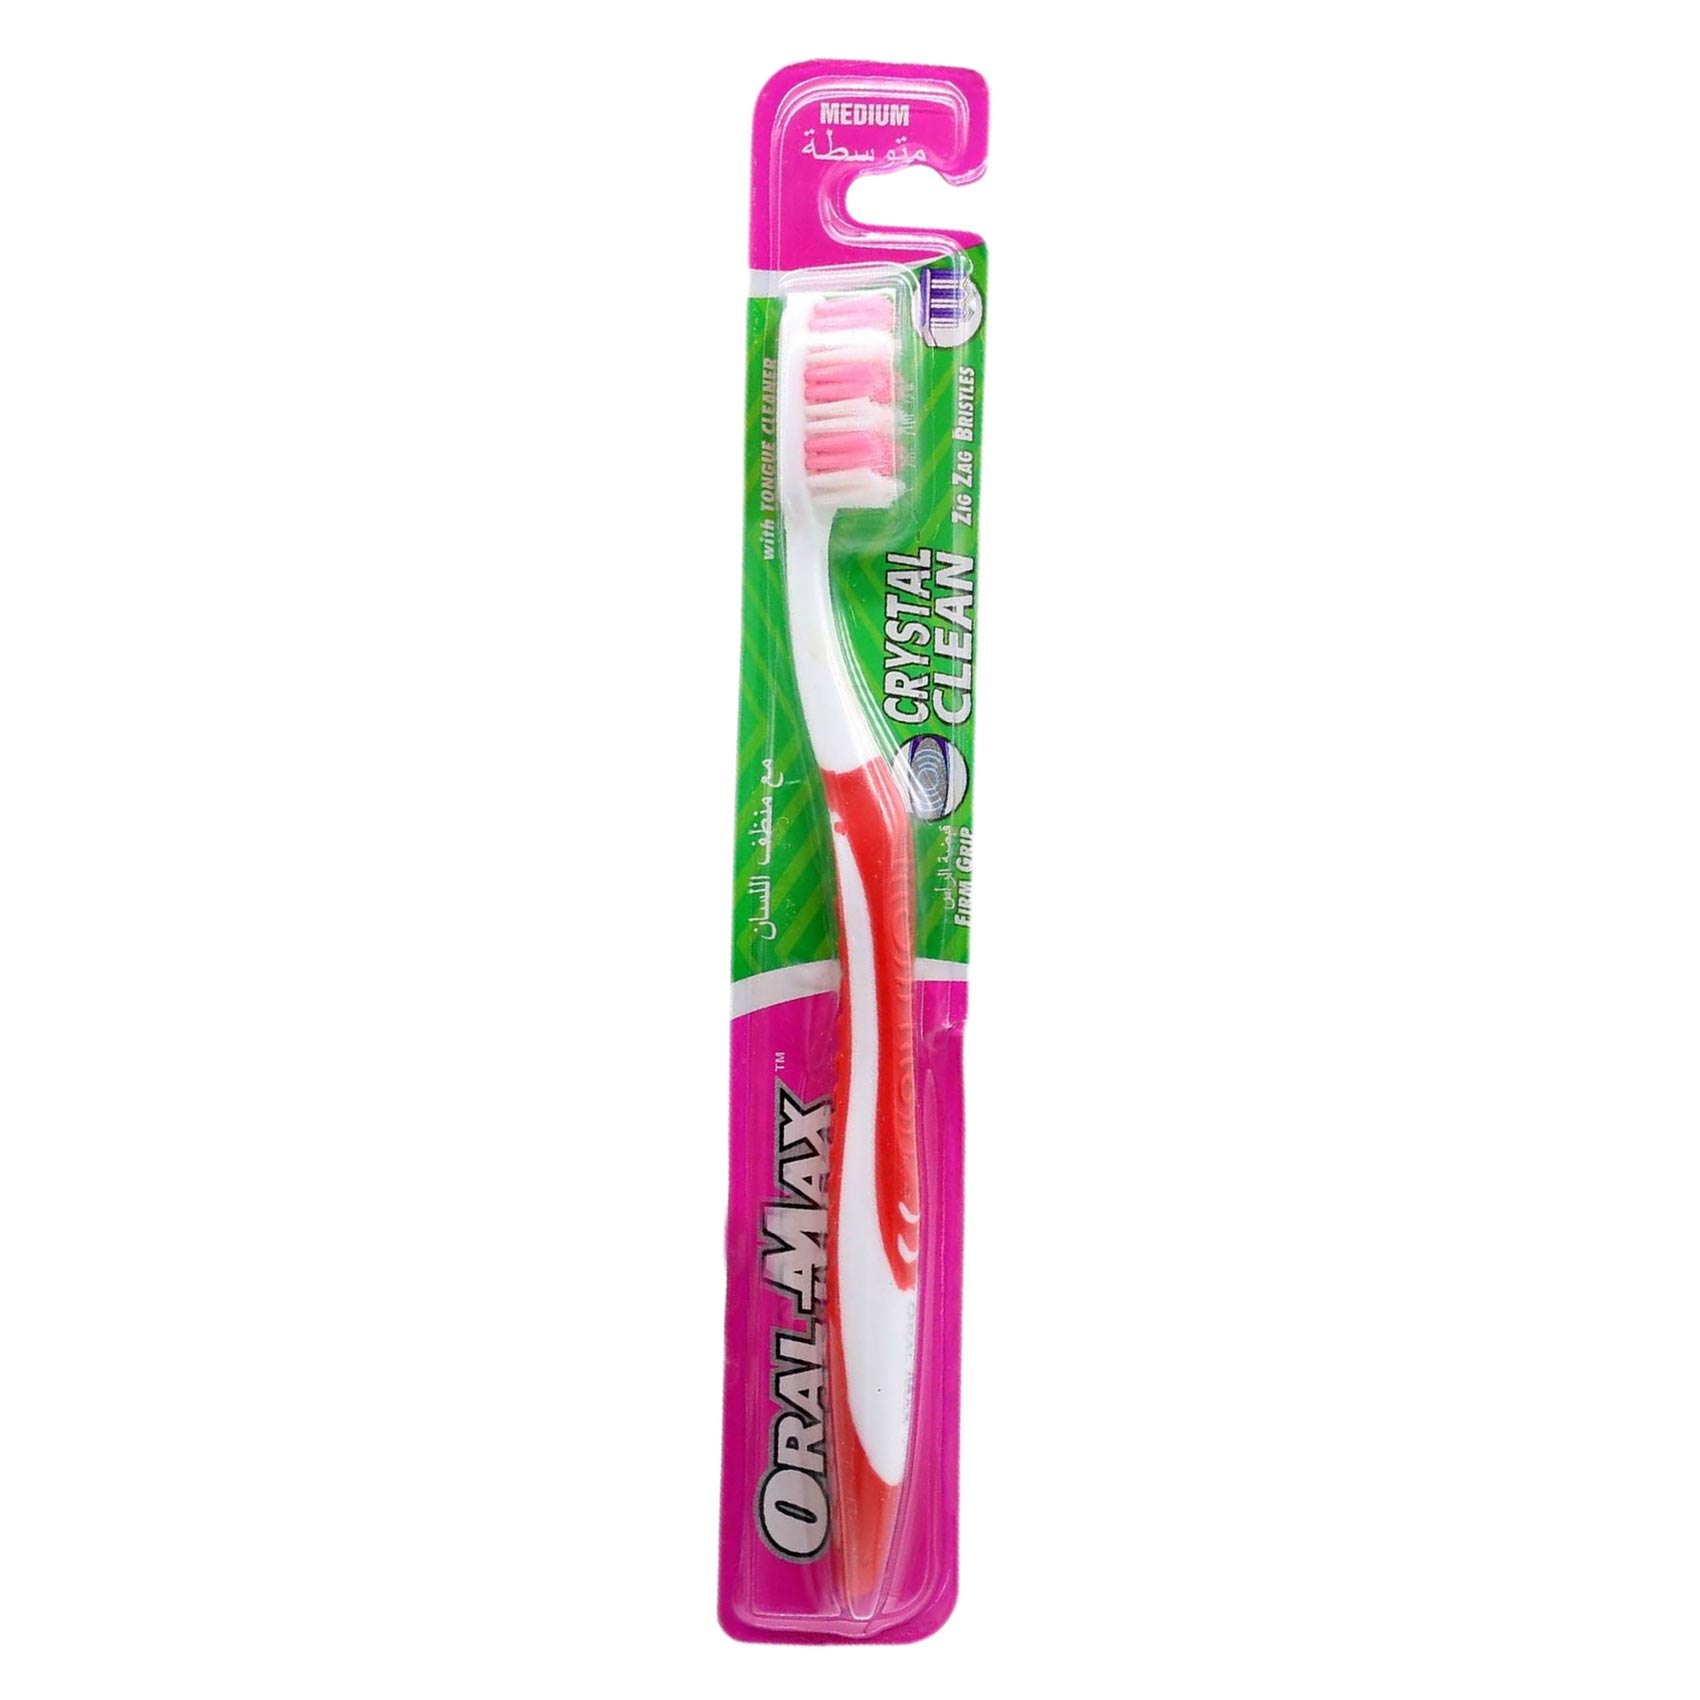 Oral Max Crystal Clean Toothbrush